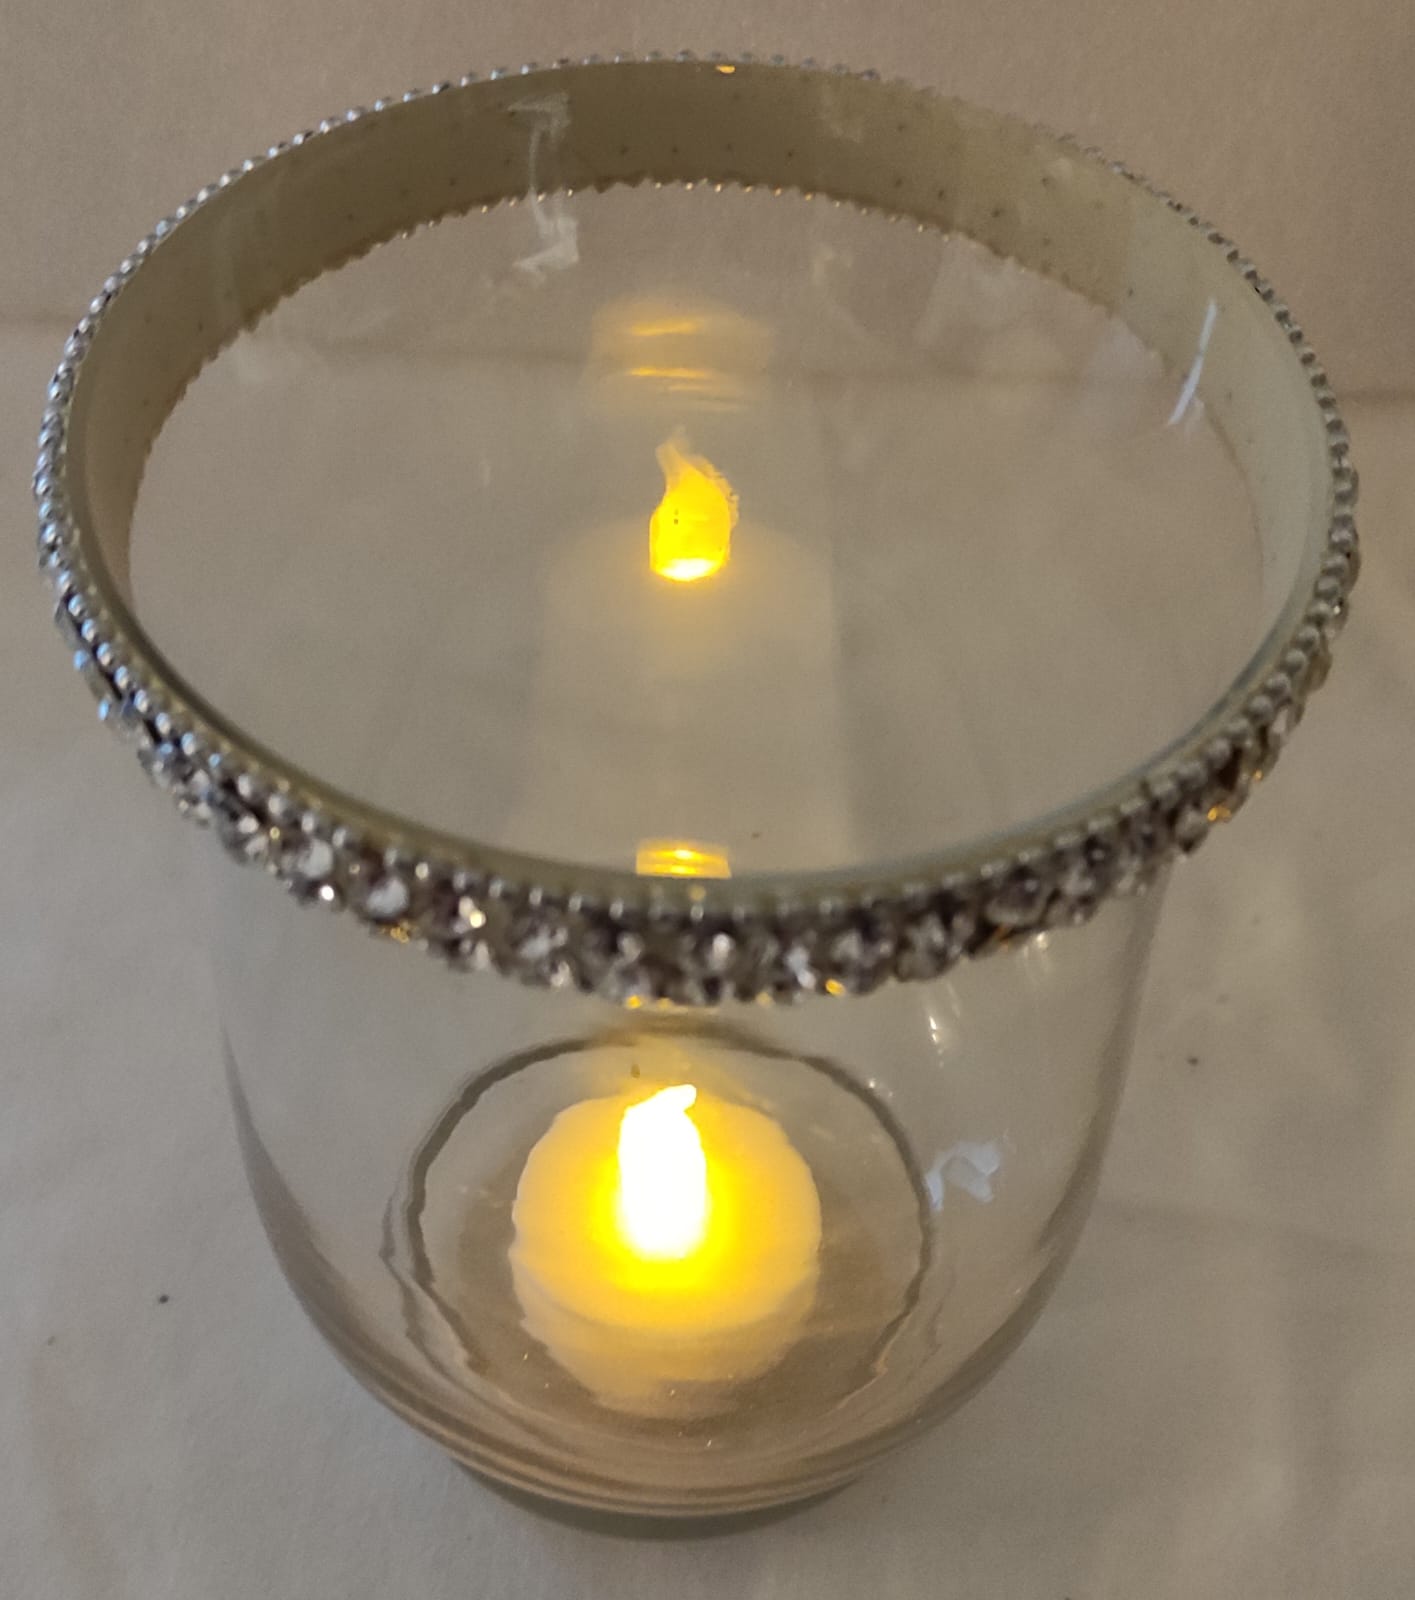 Featured image for “Porta candela in vetro con strass”